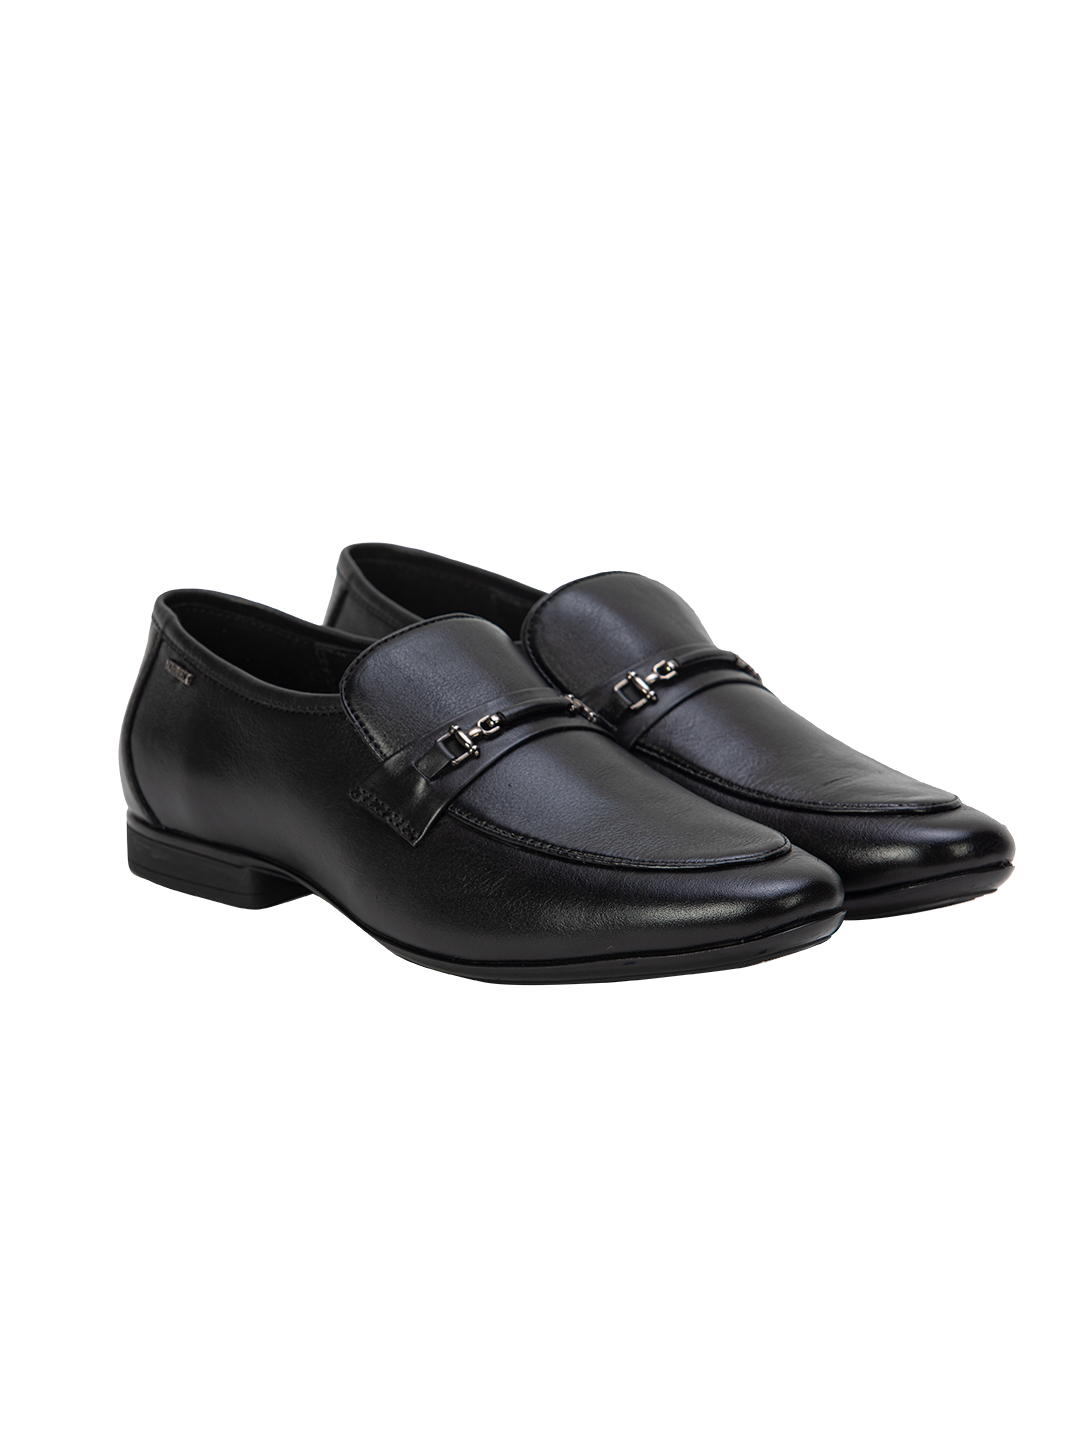 Buy Von Wellx Germany Comfort Black Glib Shoes Online in Kozhikode